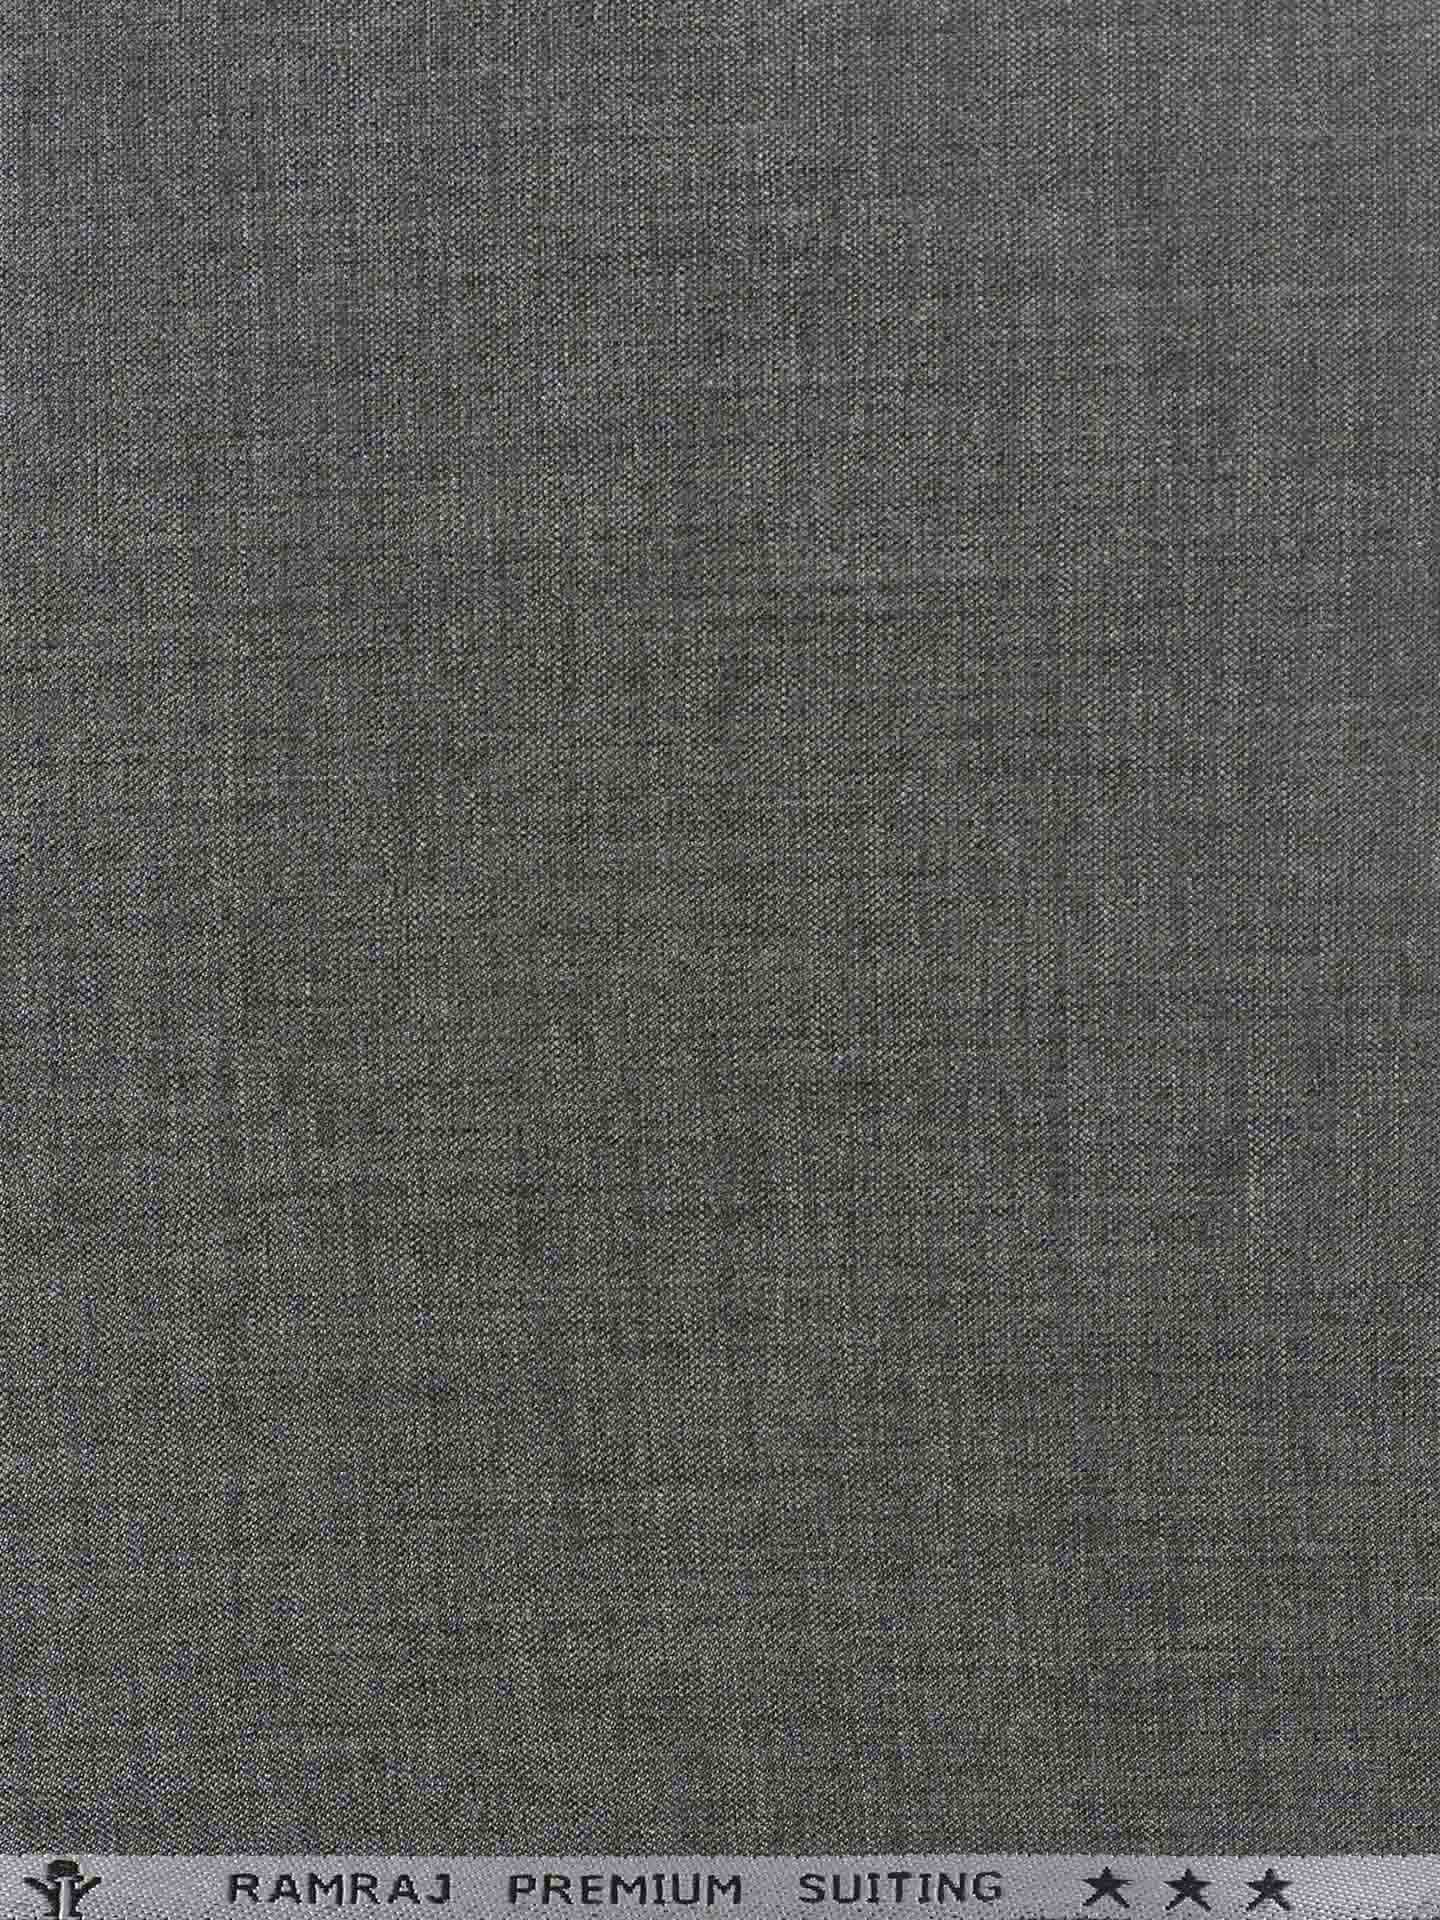 Cotton Grey Premium Suiting Fabric-Golden Days